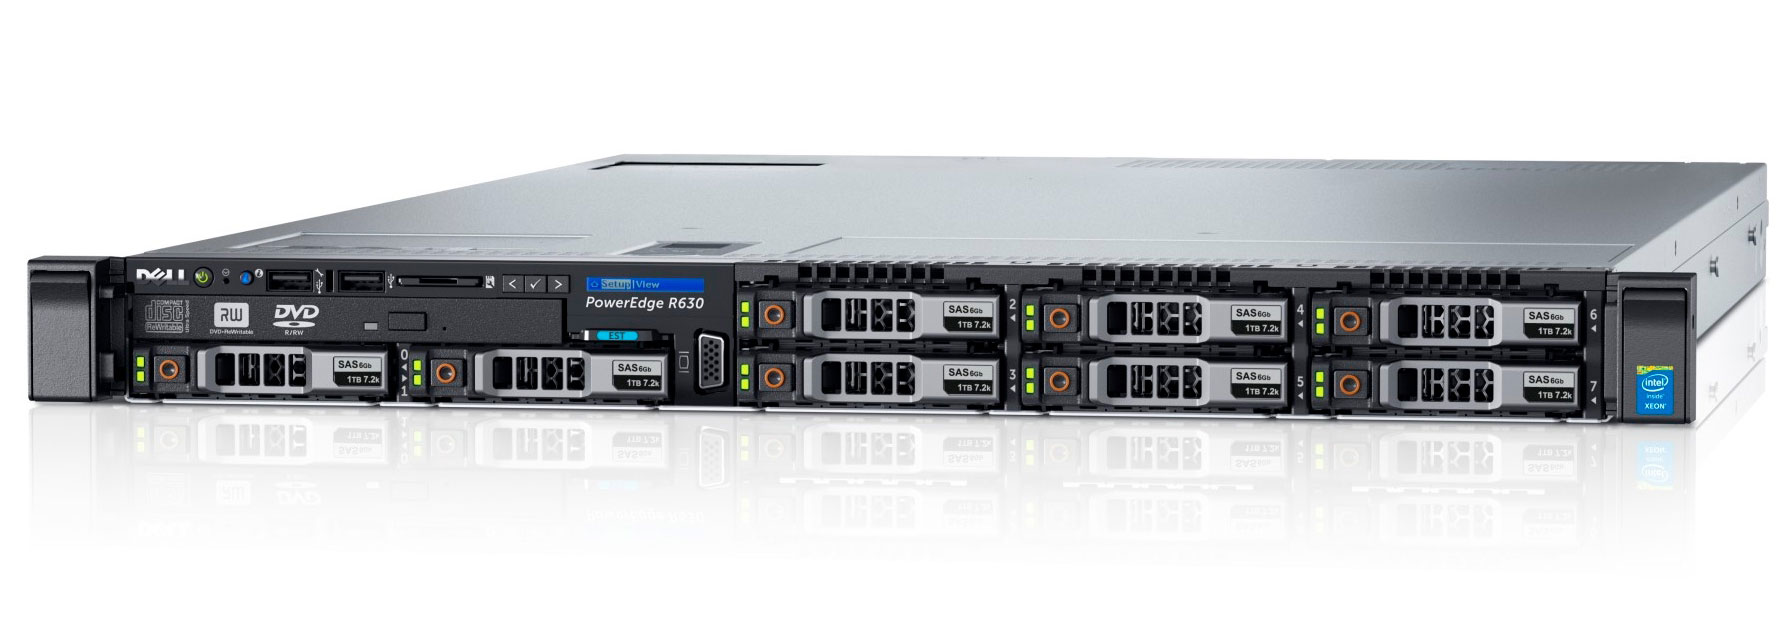 Подробное фото Сервер DELL PowerEdge R630 Xeon 2x E5-2690v4 192Gb DDR4 2133P 8x noHDD 2.5", SAS RAID Perc H730 mini, 1024Mb, DVD, 2*PSU